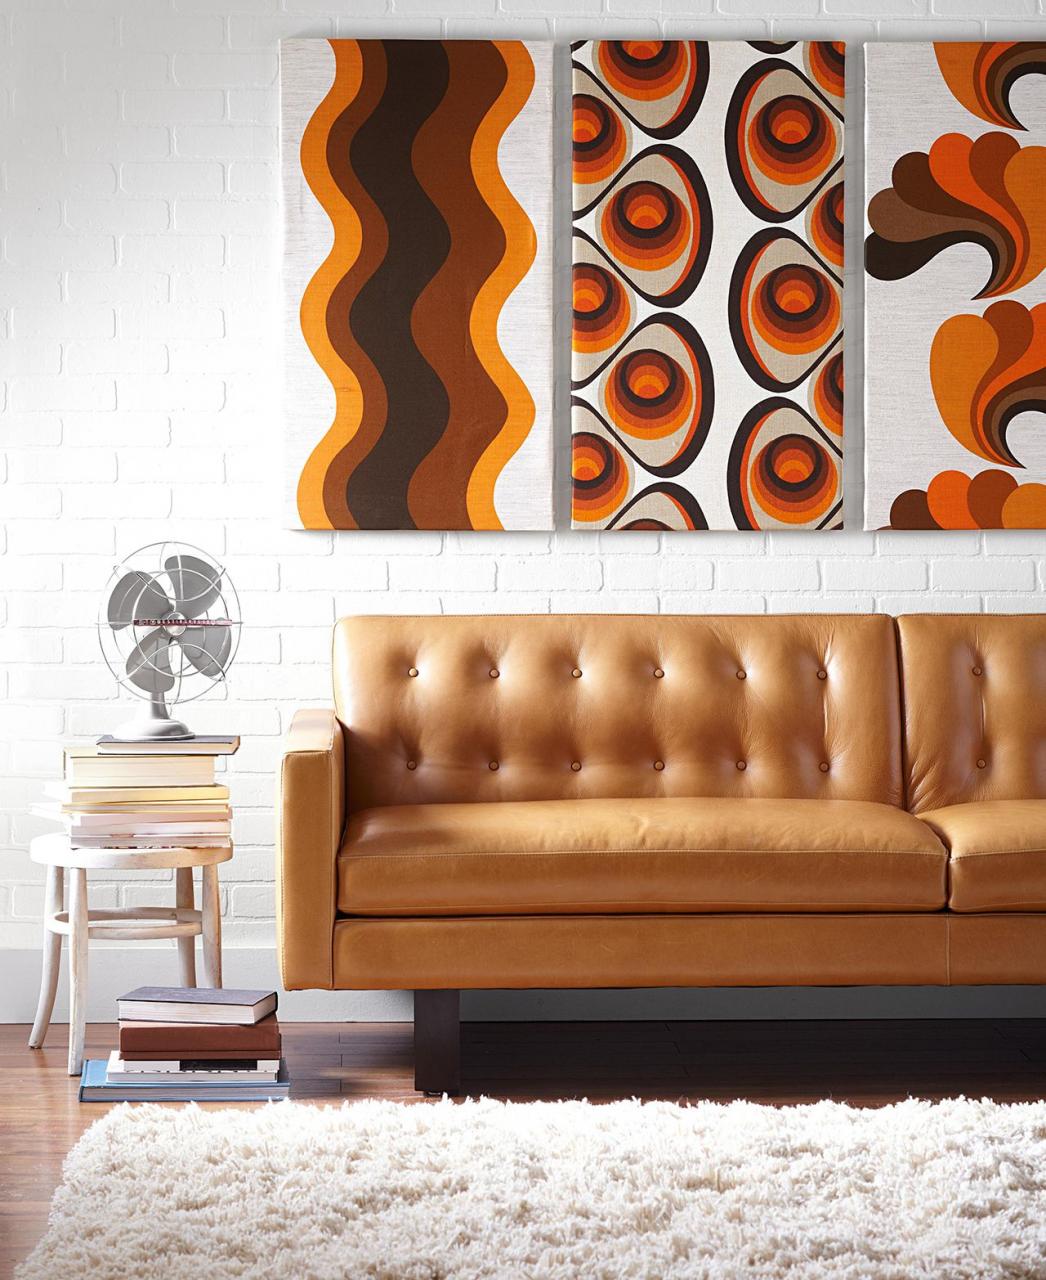 seventies-style print orange couch